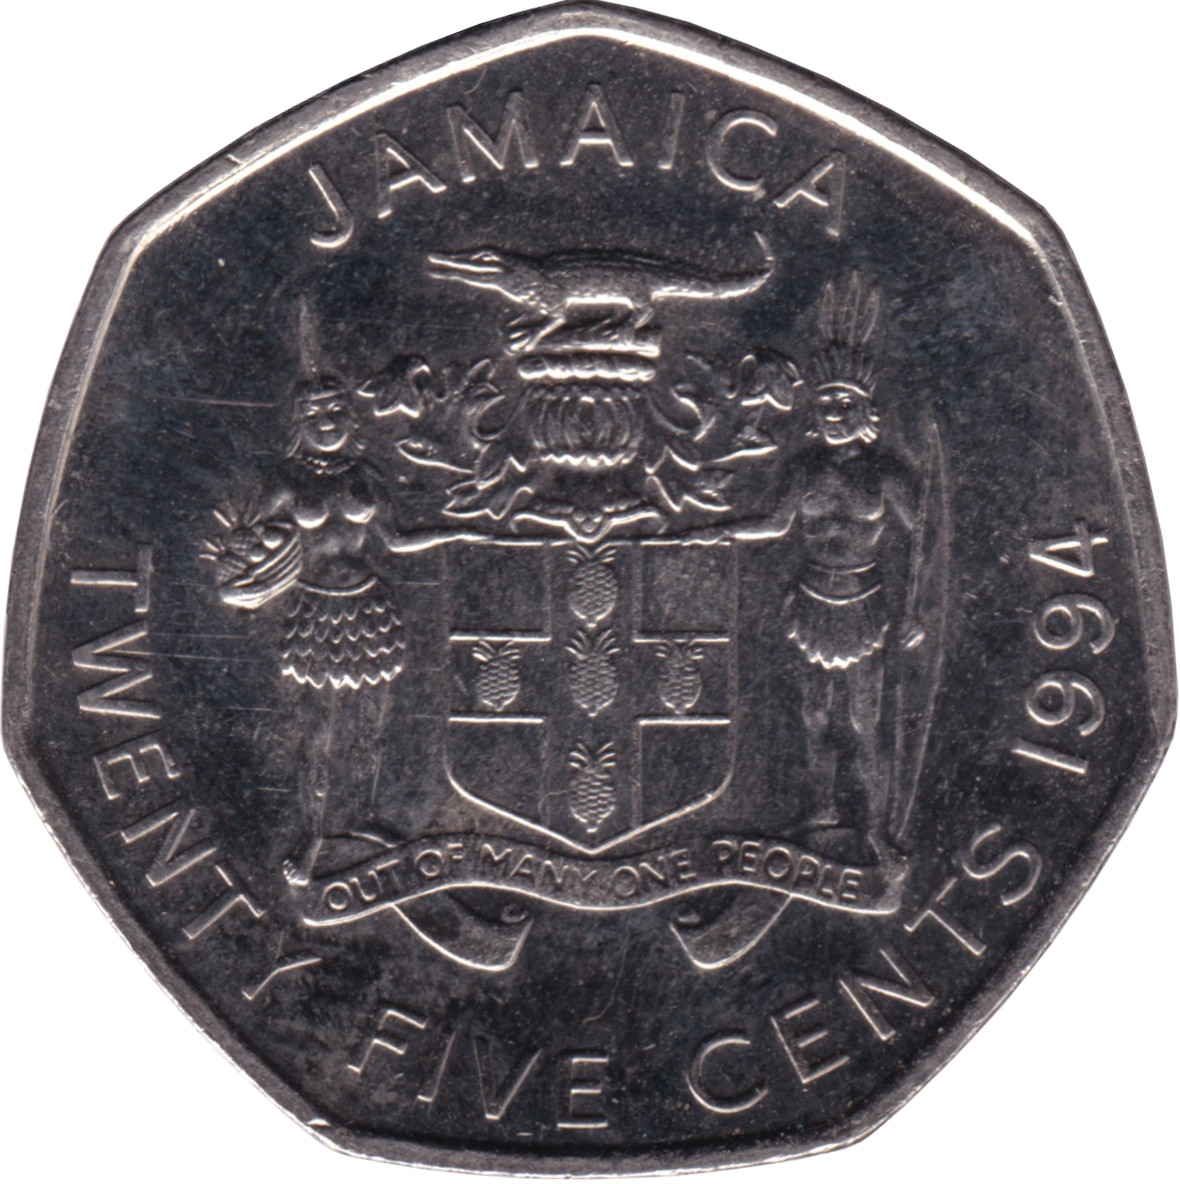 25 cents - Marcus Garvey - Grand module